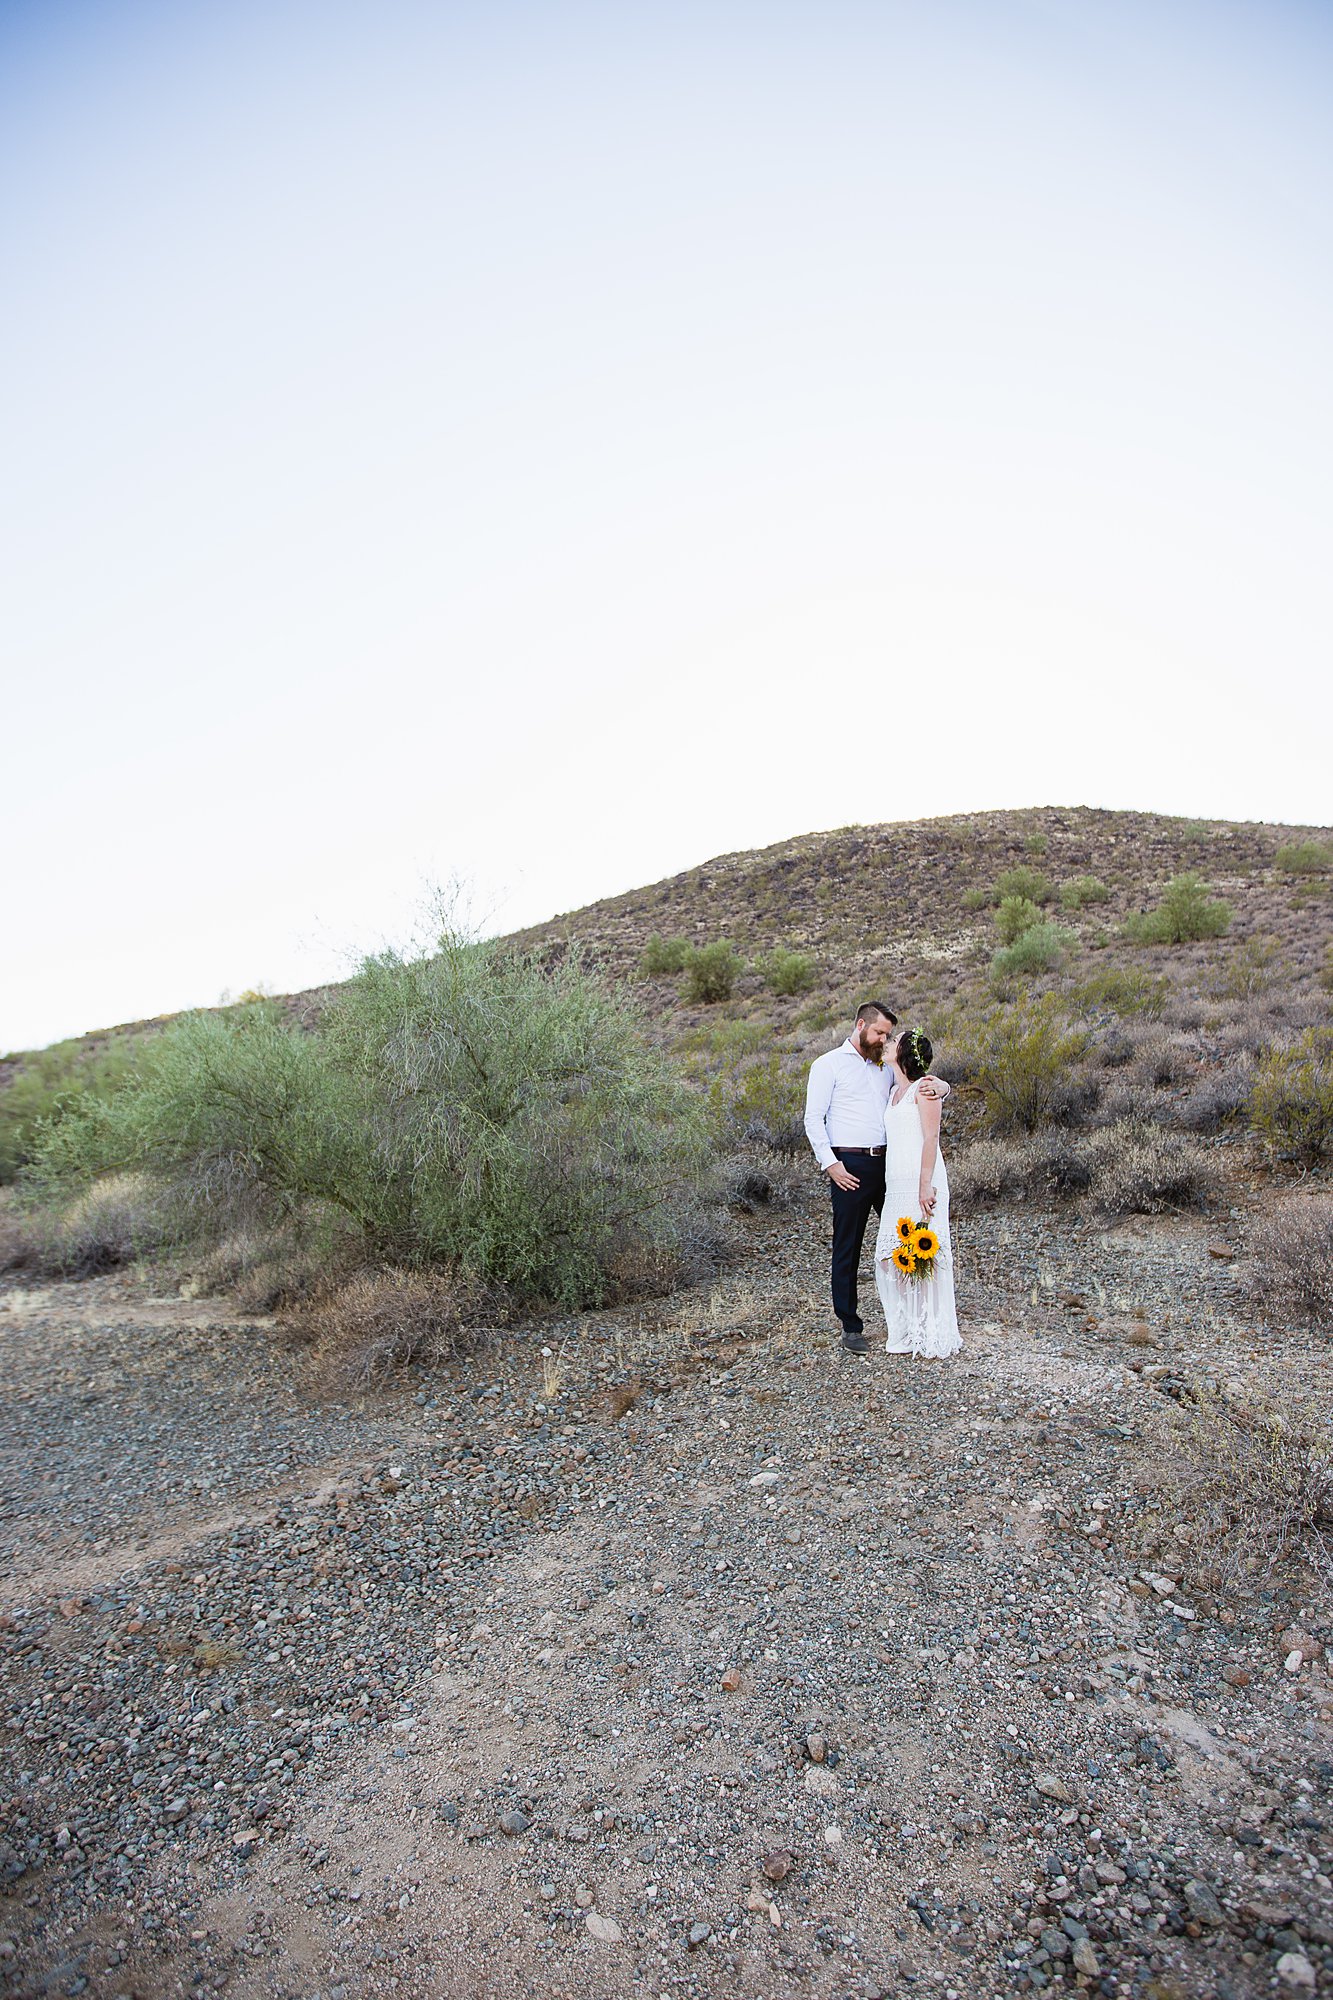 Simple boho bride and groom in the Arizona desert by Phoenix wedding photographers PMA Photography.